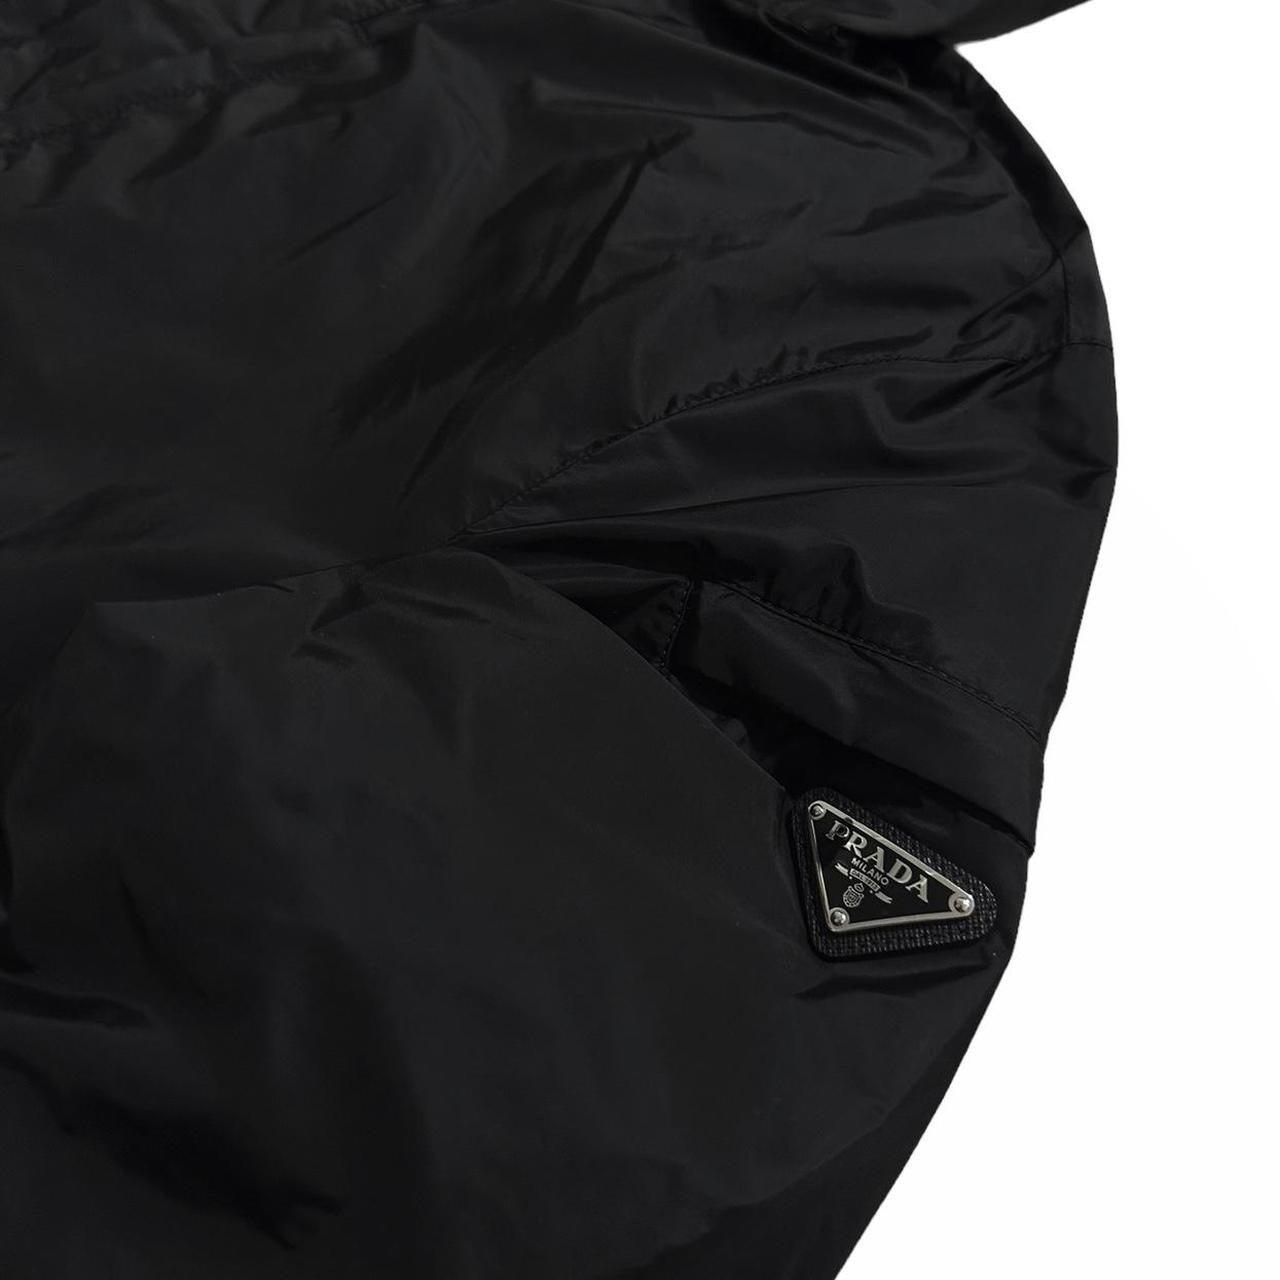 Prada S/S 2019 Nylon Black Jacket - Known Source